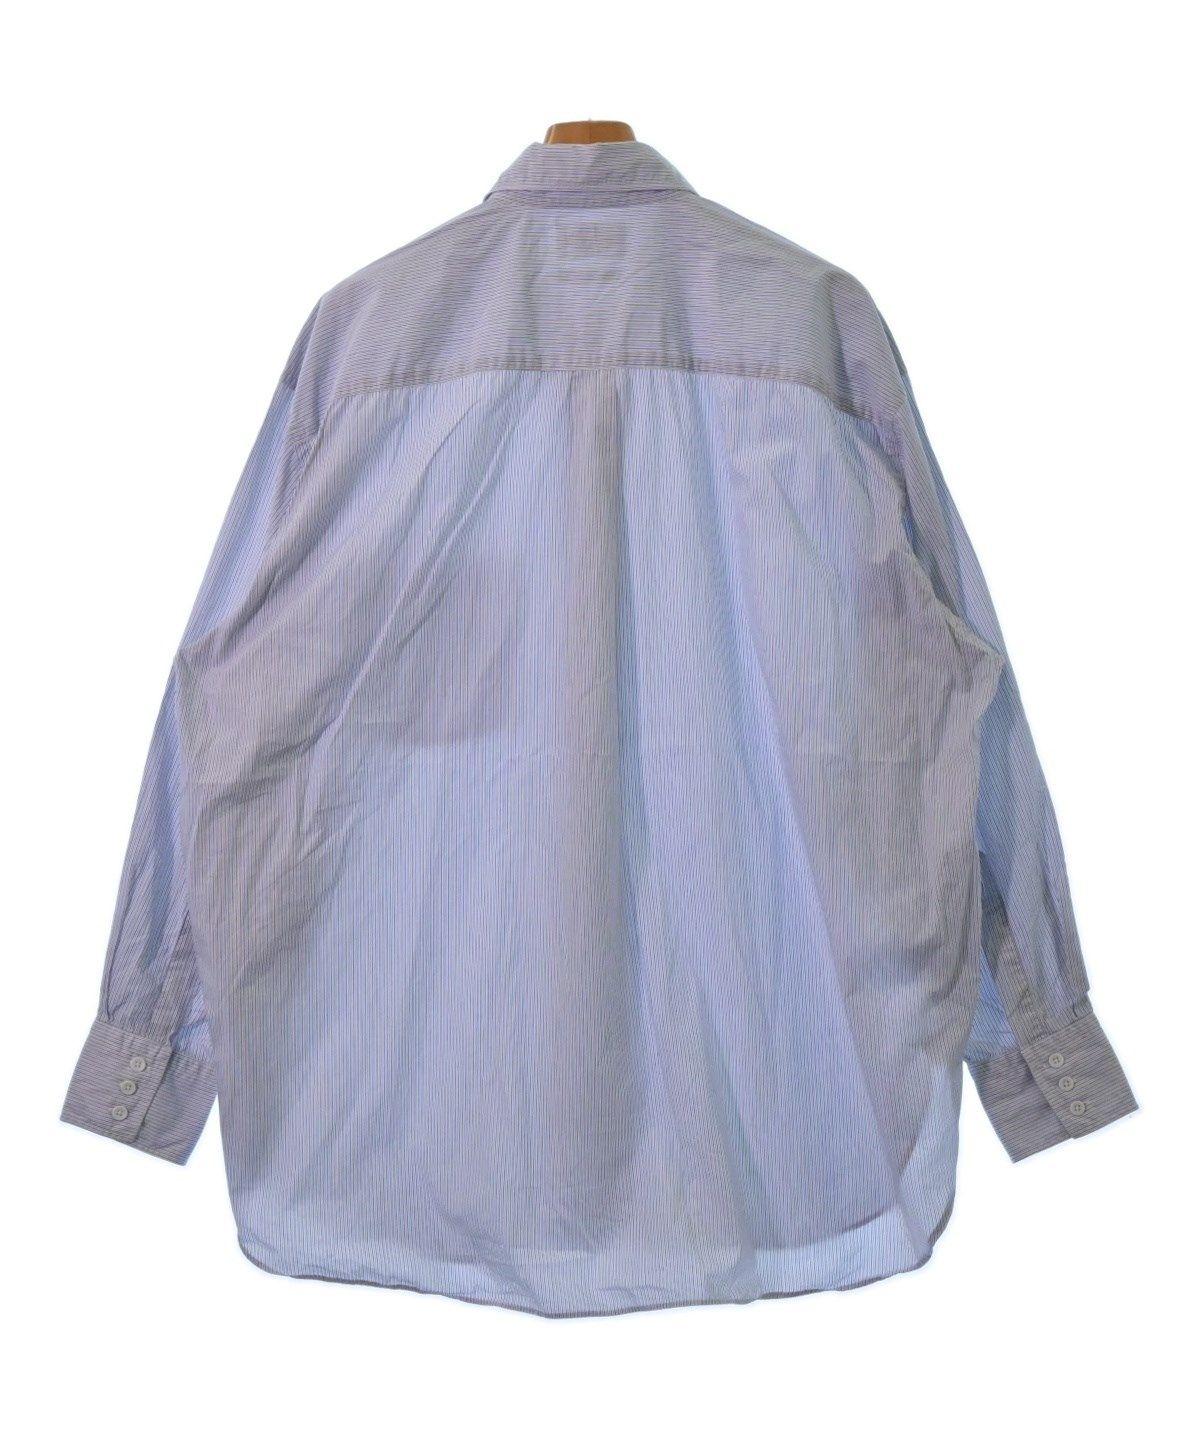 Marvine Pontiak Shirts Makers - Online shopping website for reused Japanese  clothing brands